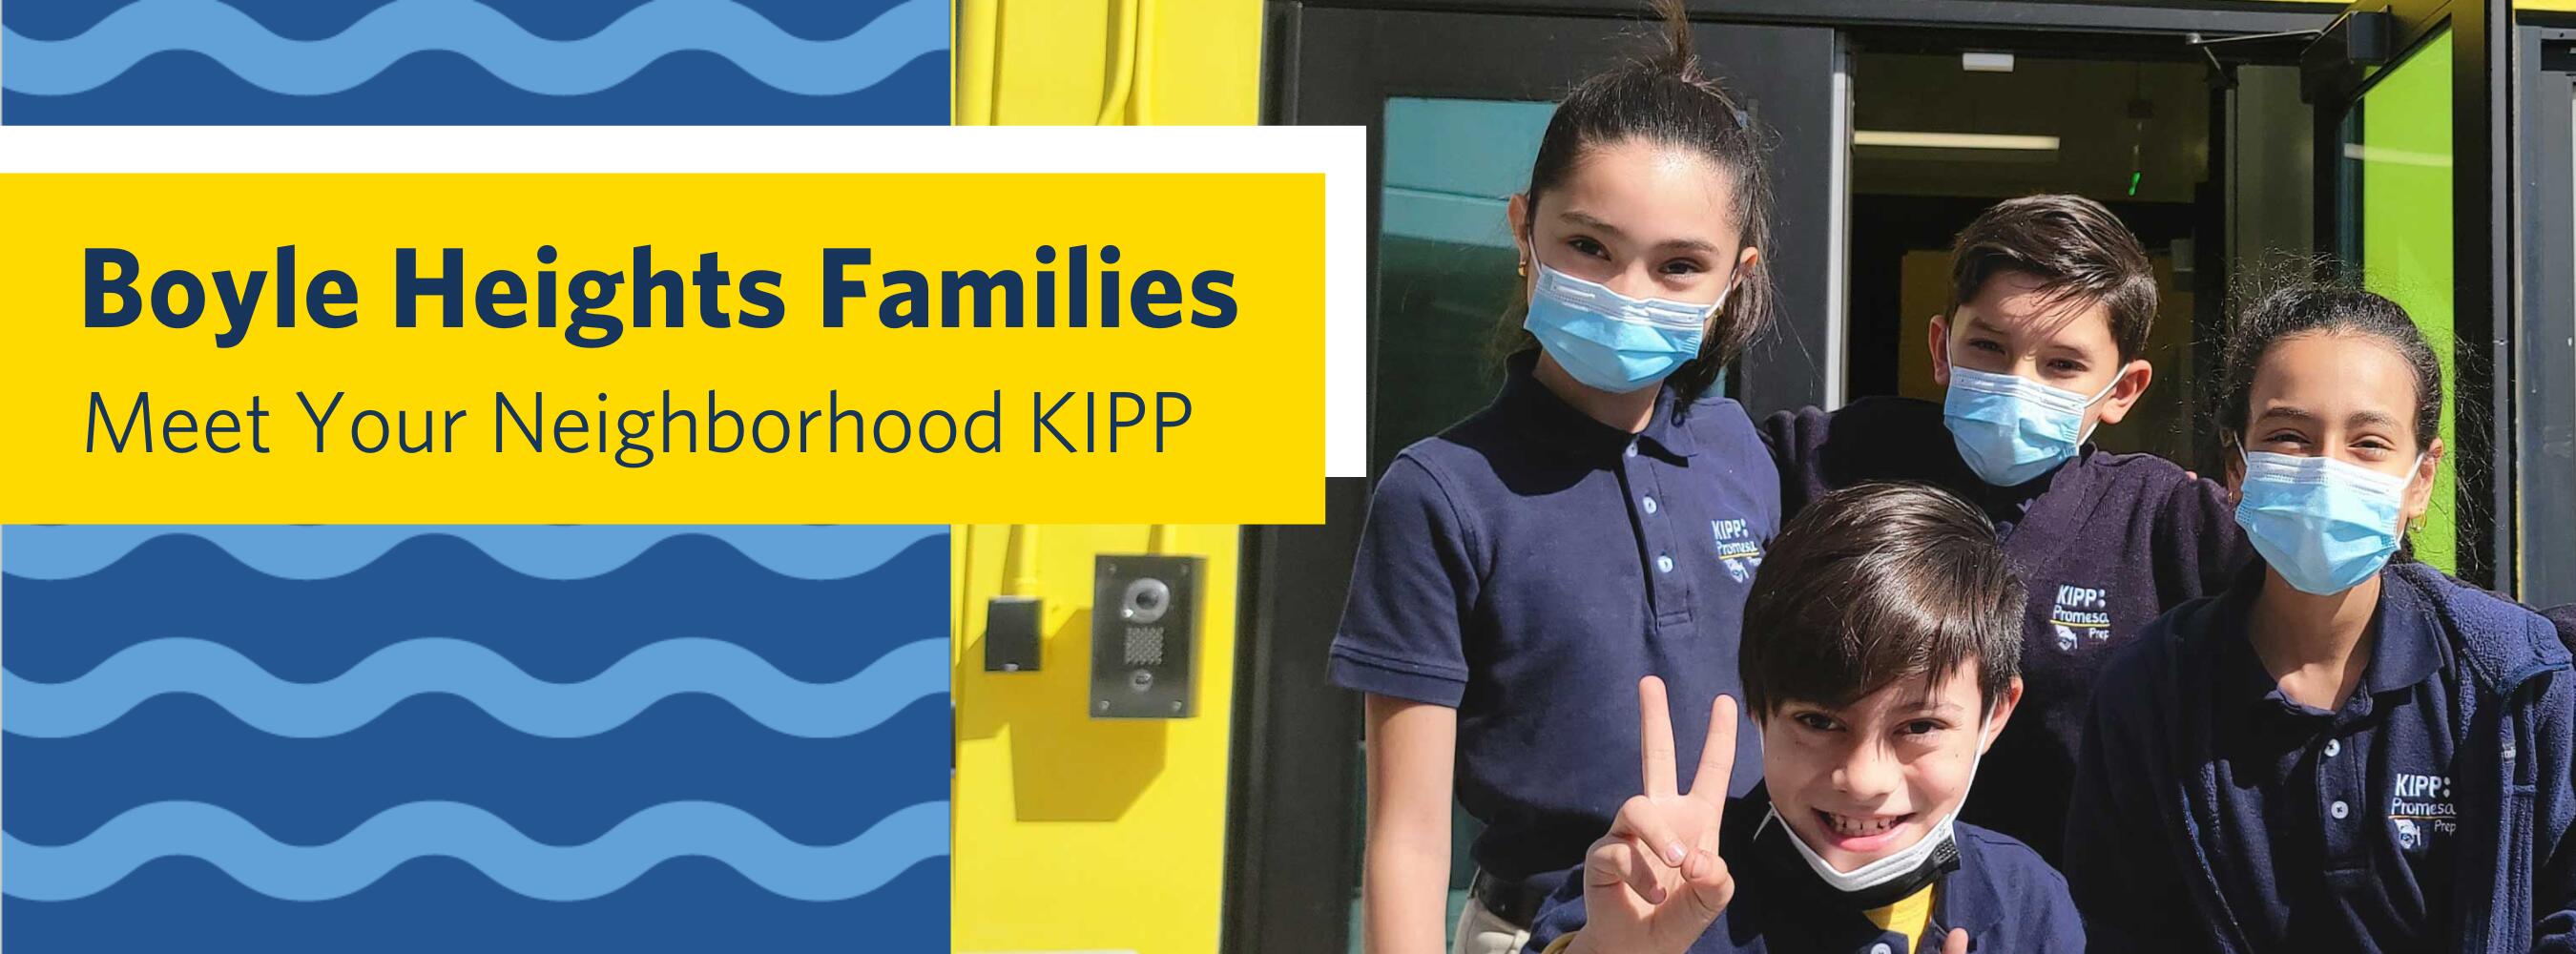 Boyle Heights Families: Meet Your Neighborhood KIPP